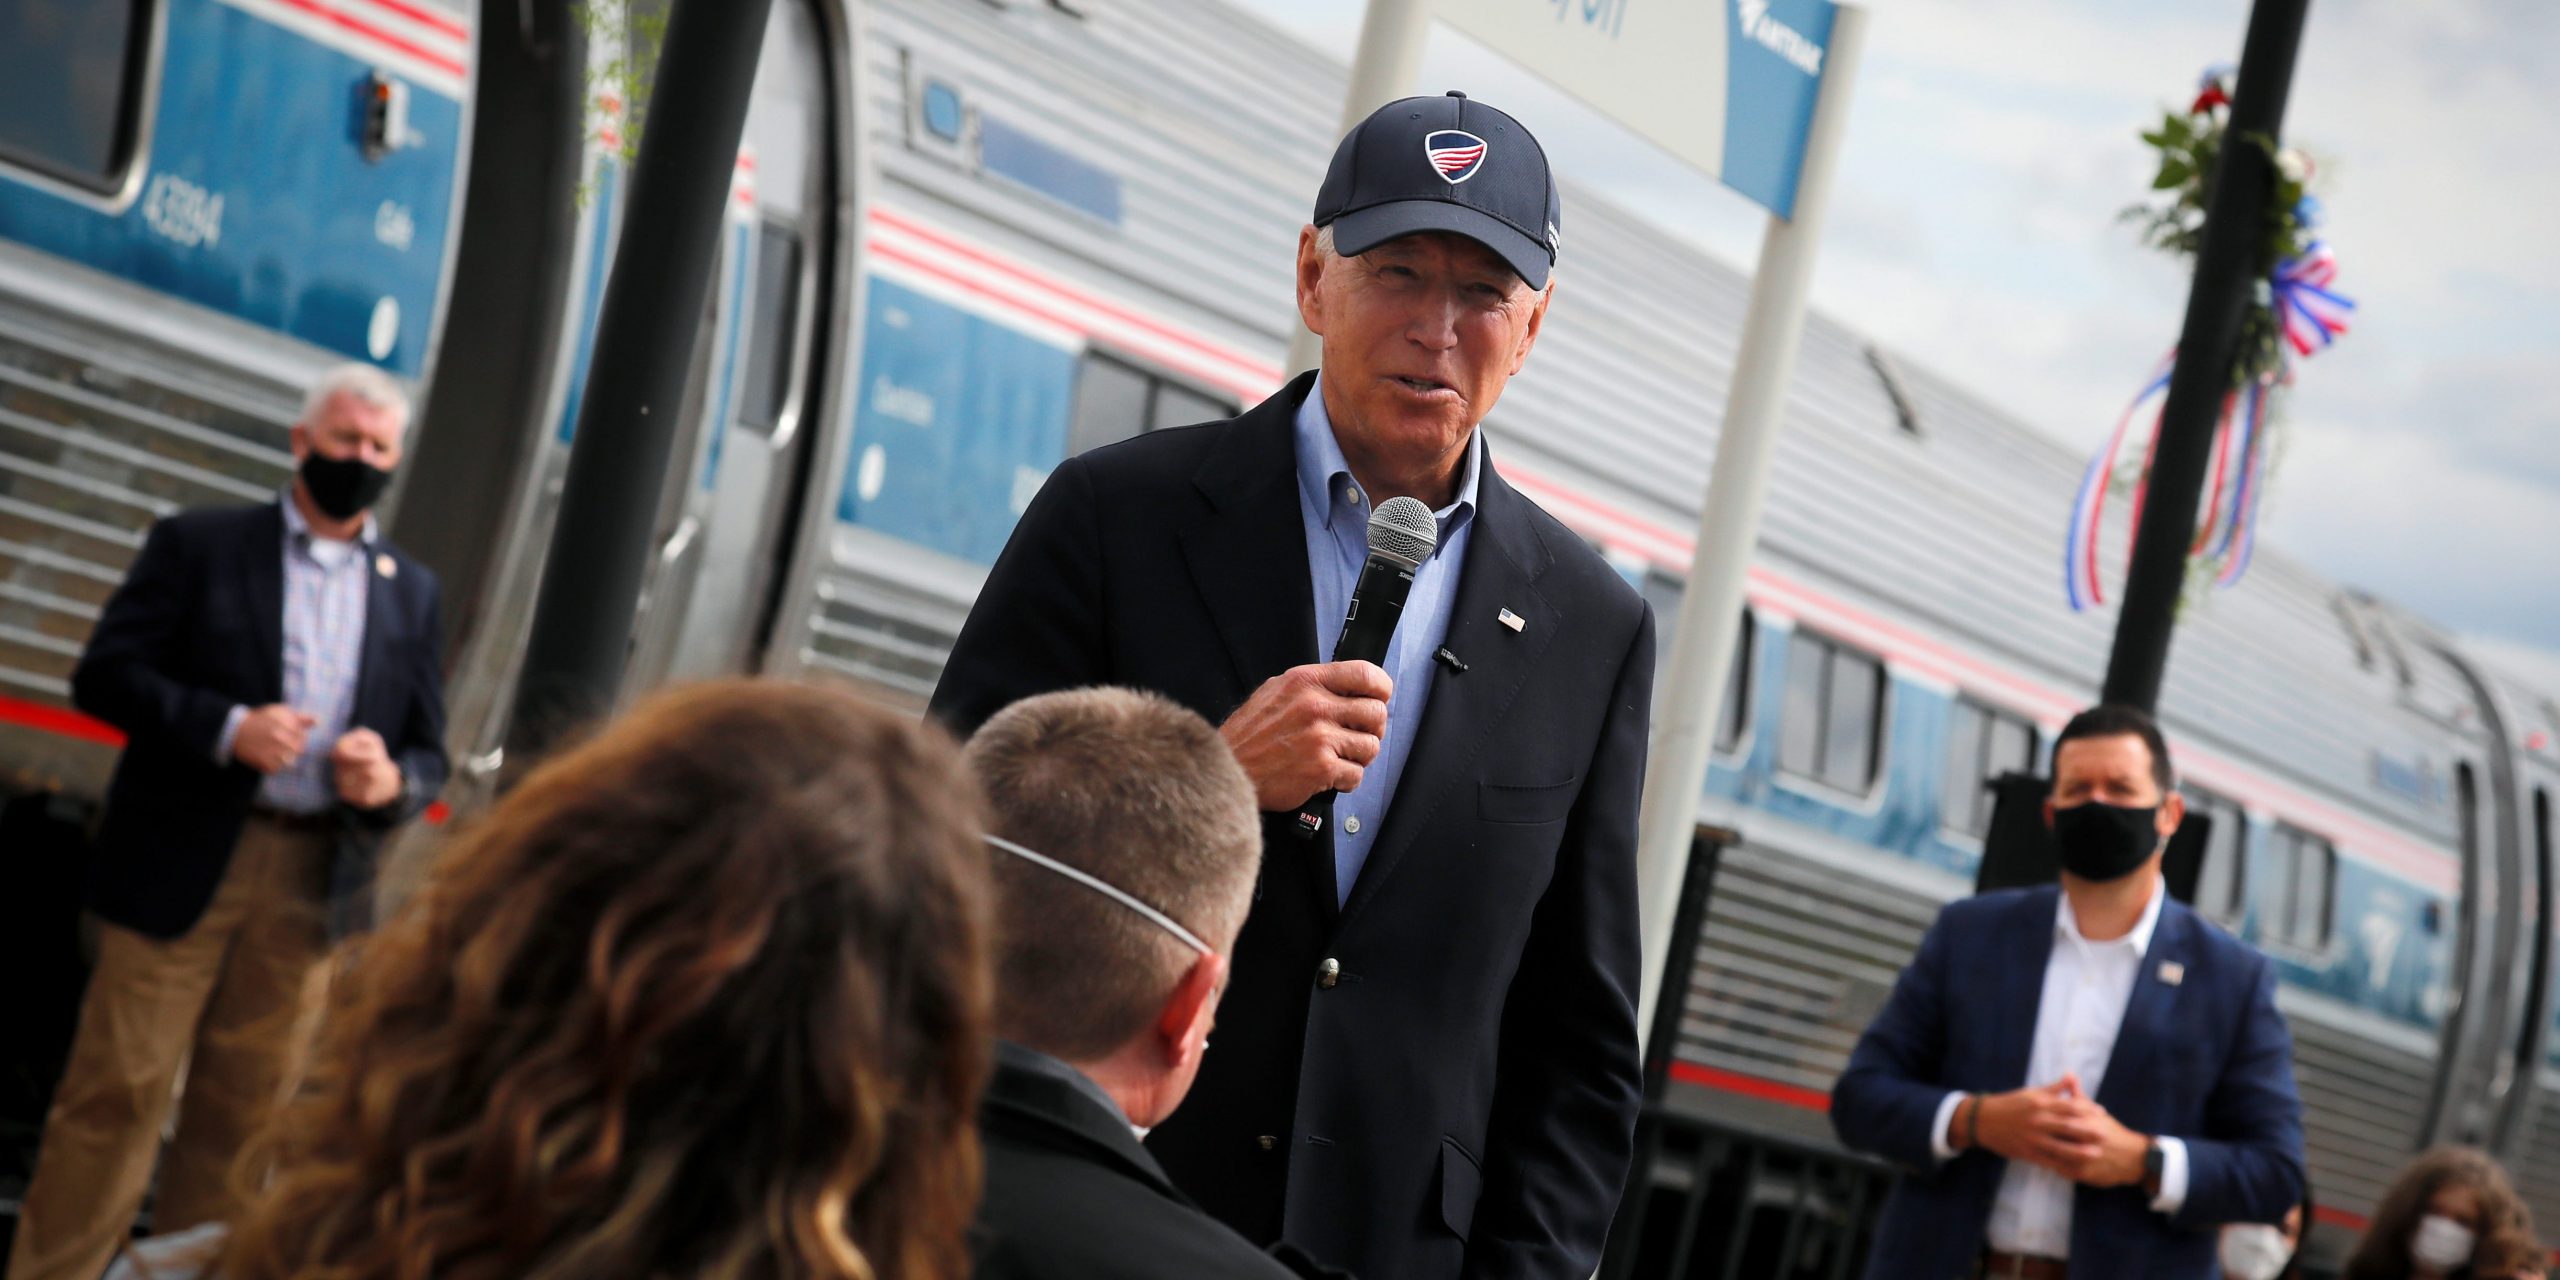 Biden Speaking in front of Amtrak Train Ohio 2020.JPG